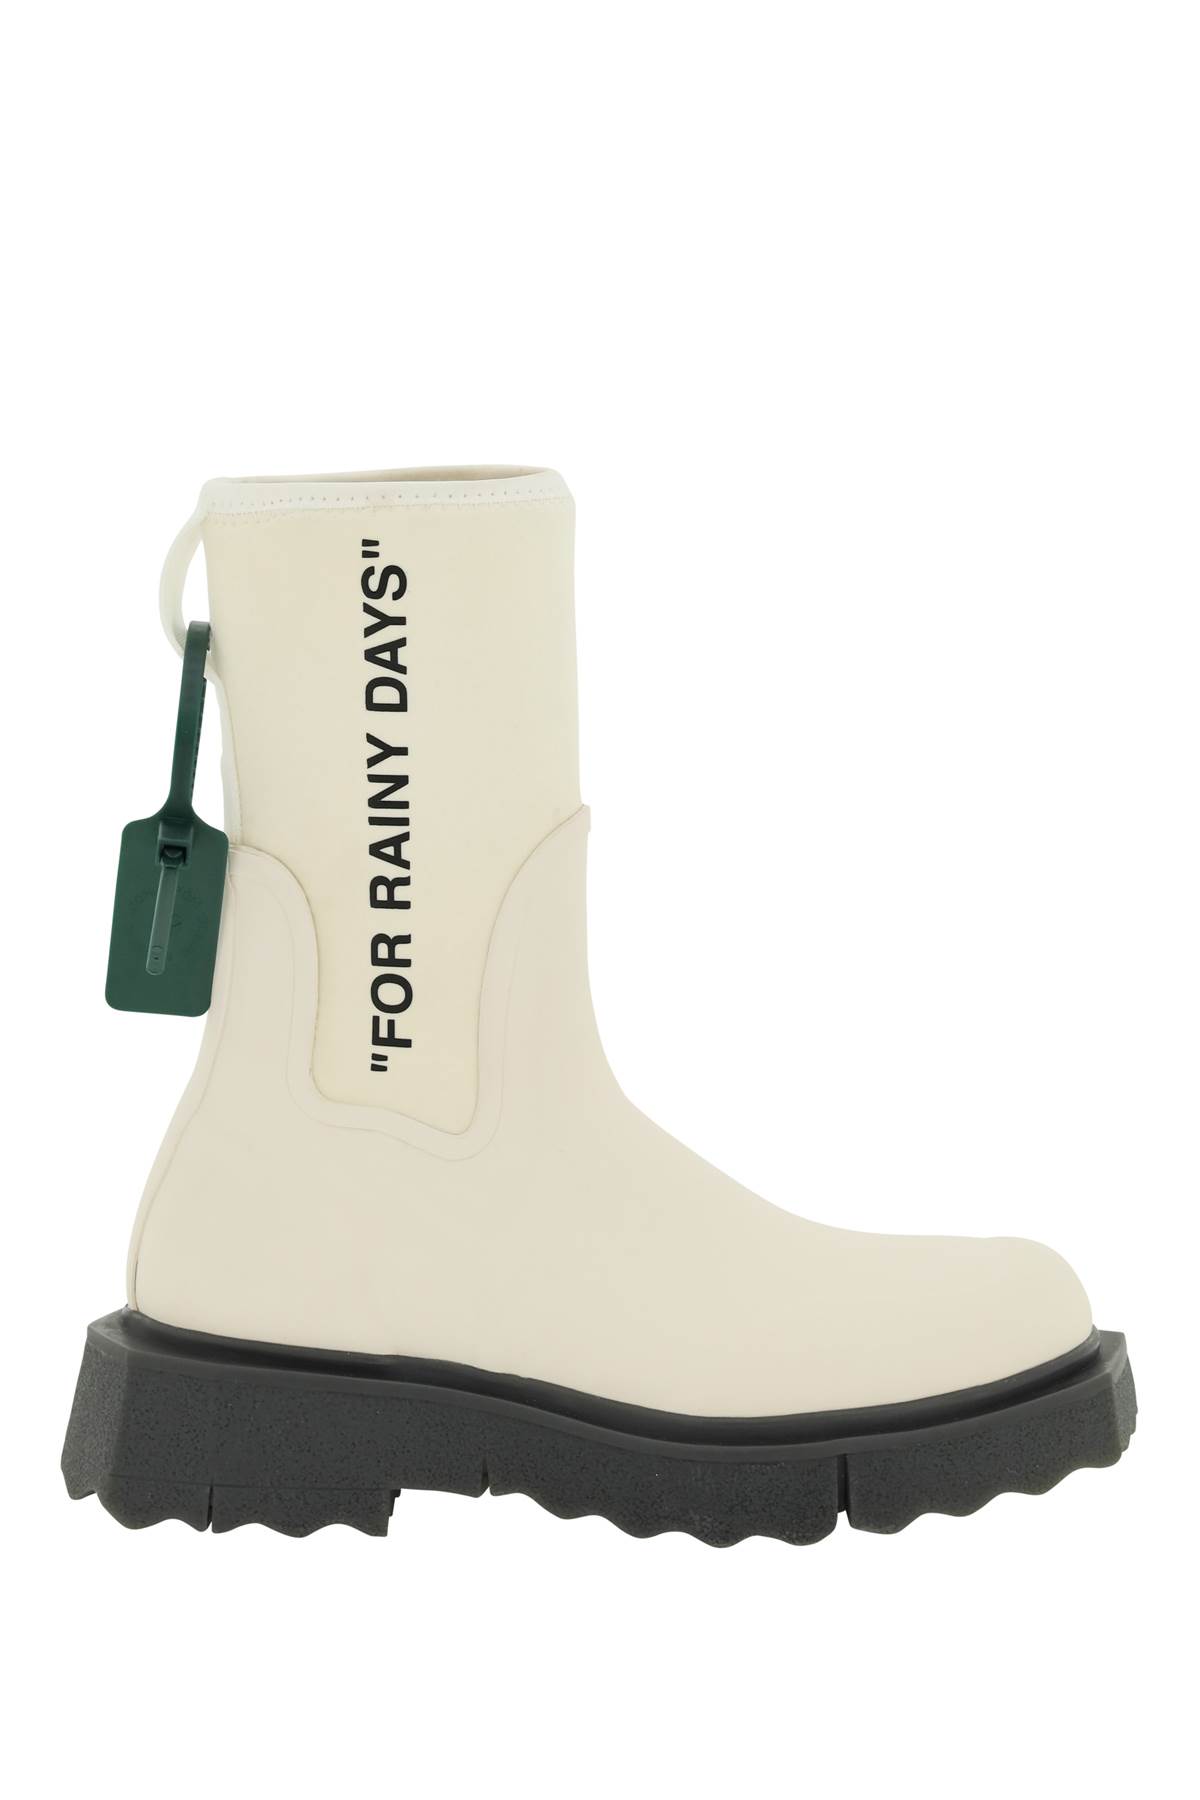 Off-White Sponge Sole Rain Ankle Boots